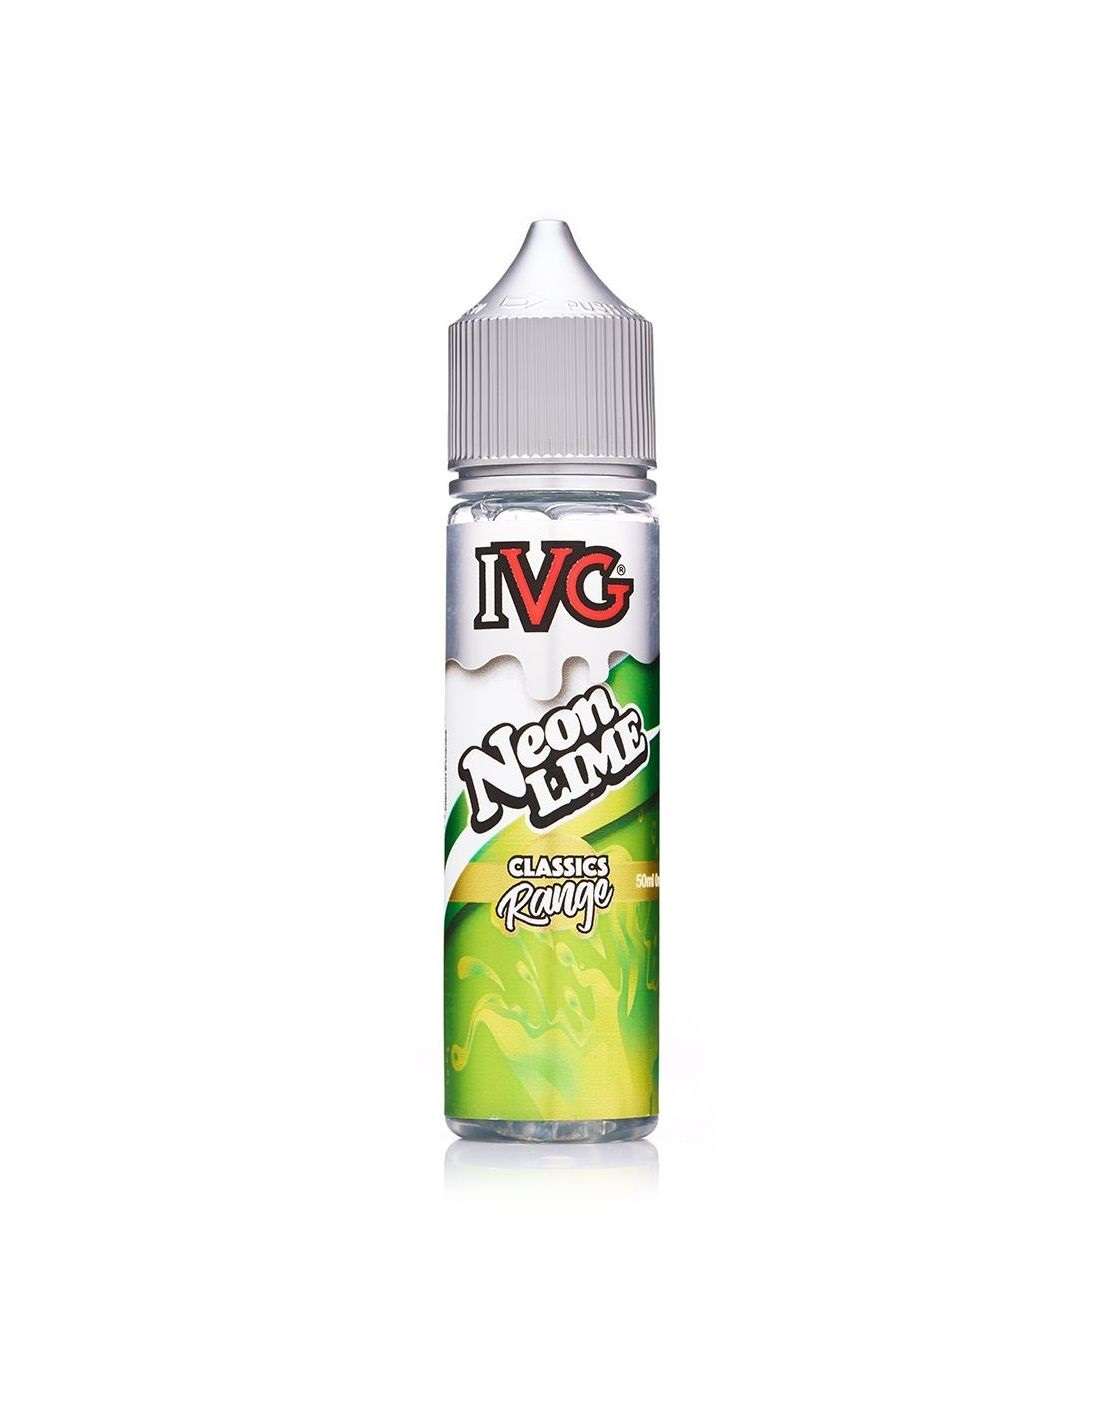  IVG Classics Range E Liquid - Neon Lime - 50ml 